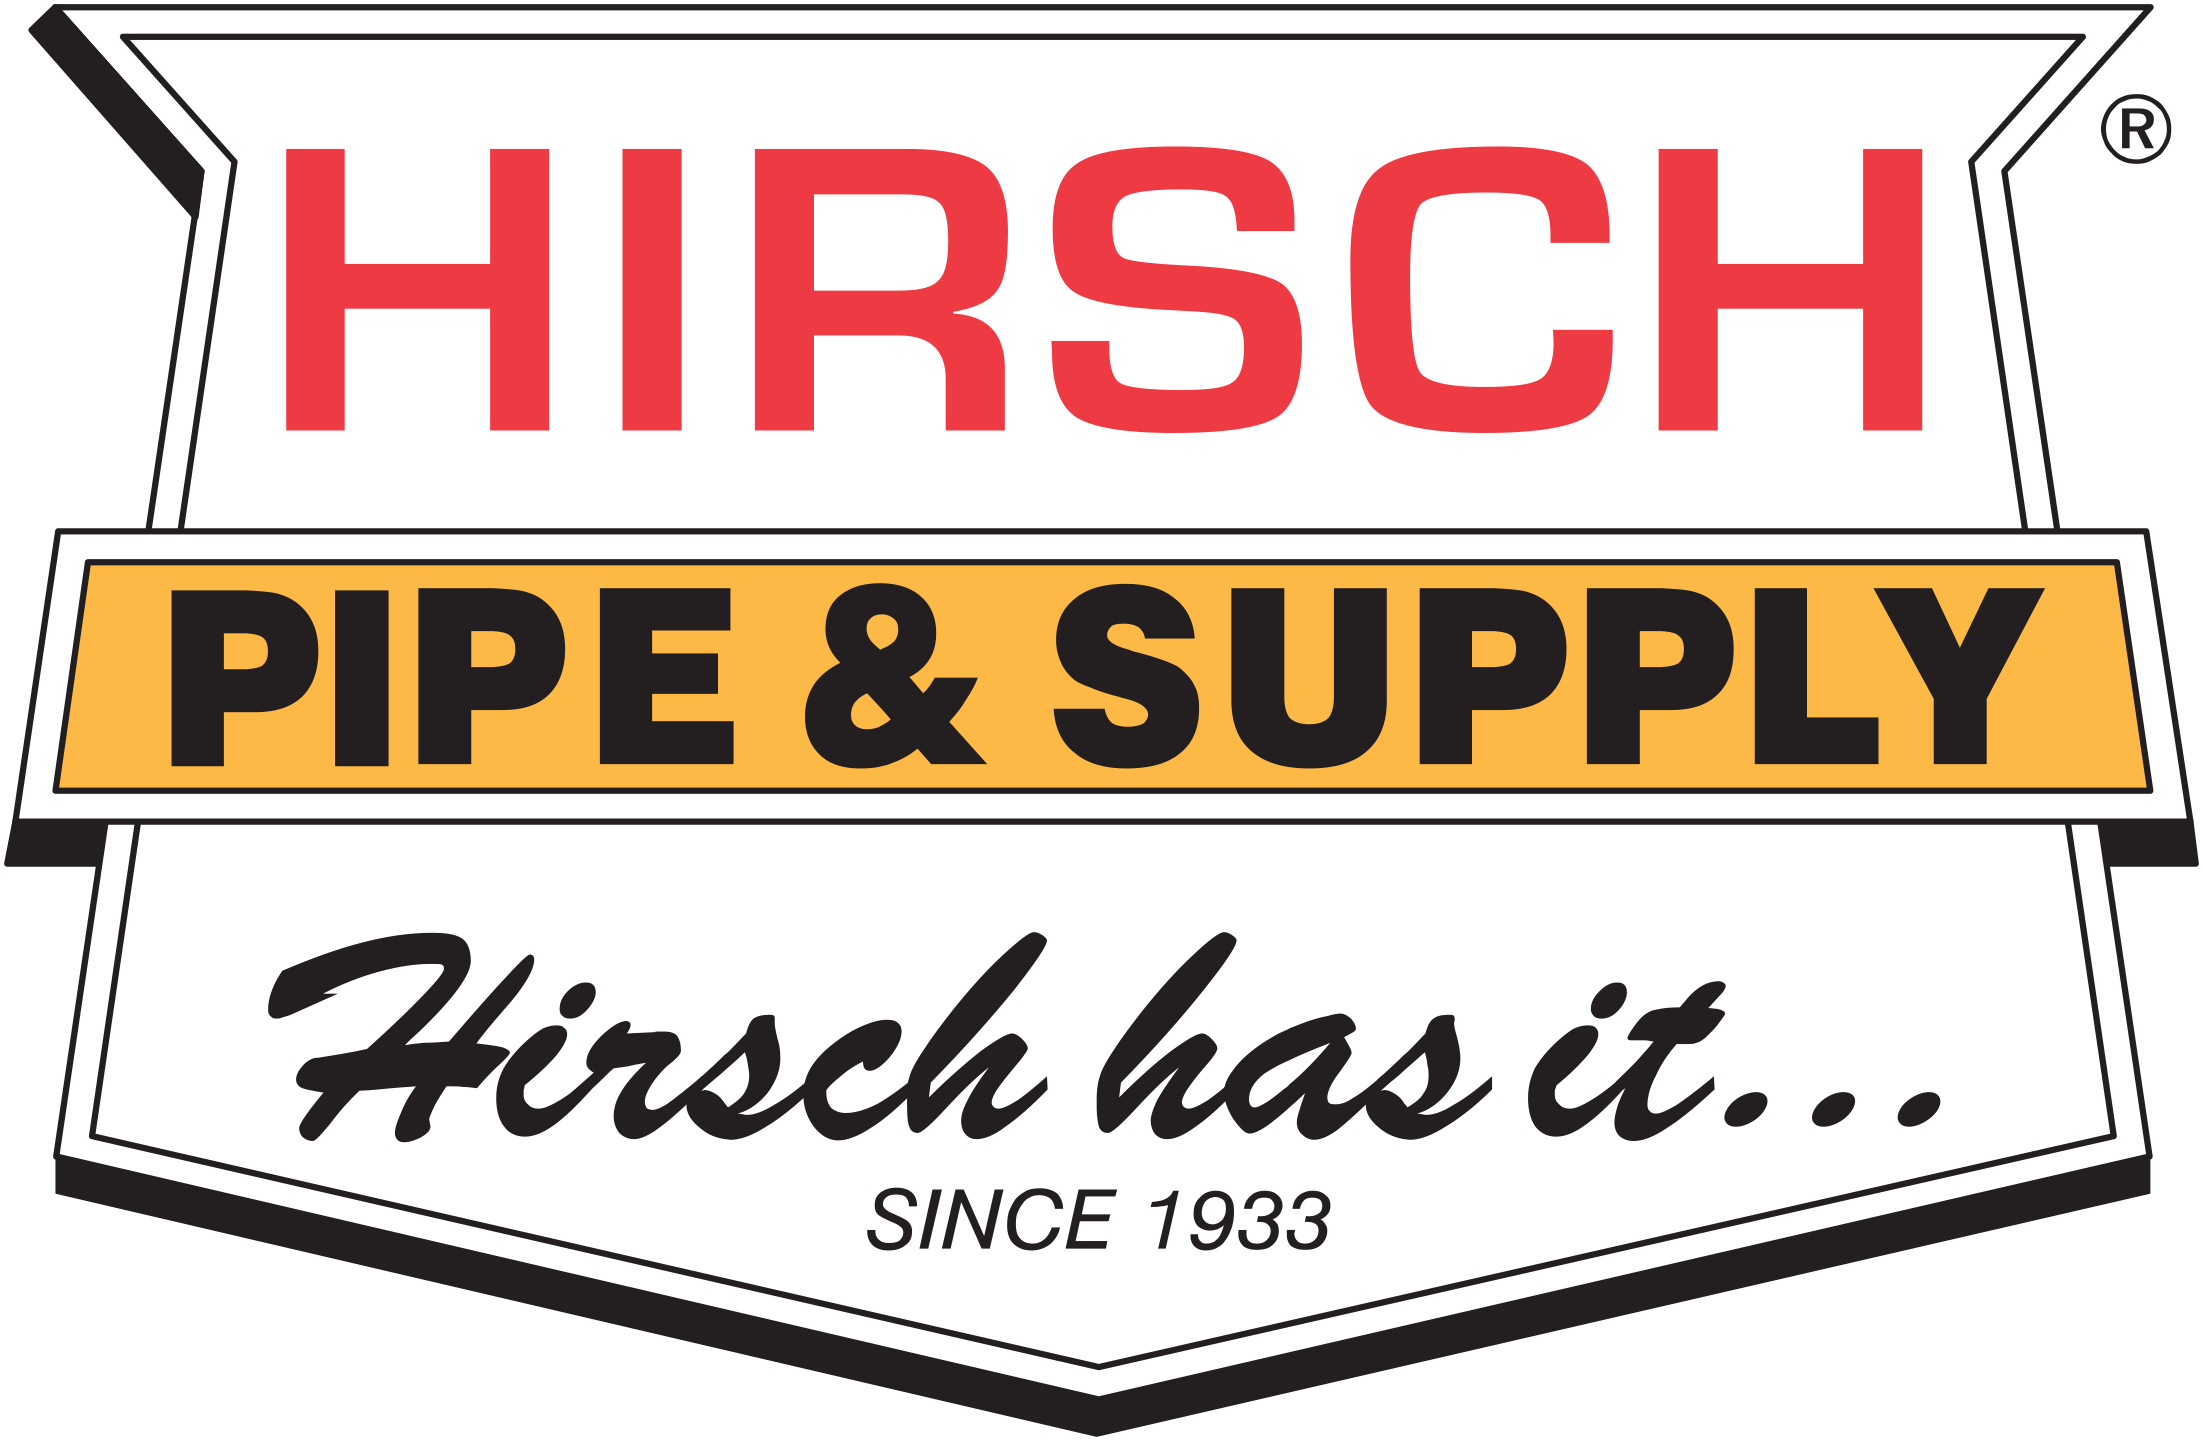 Hirsch Pipe & Supple Co., Inc. logo